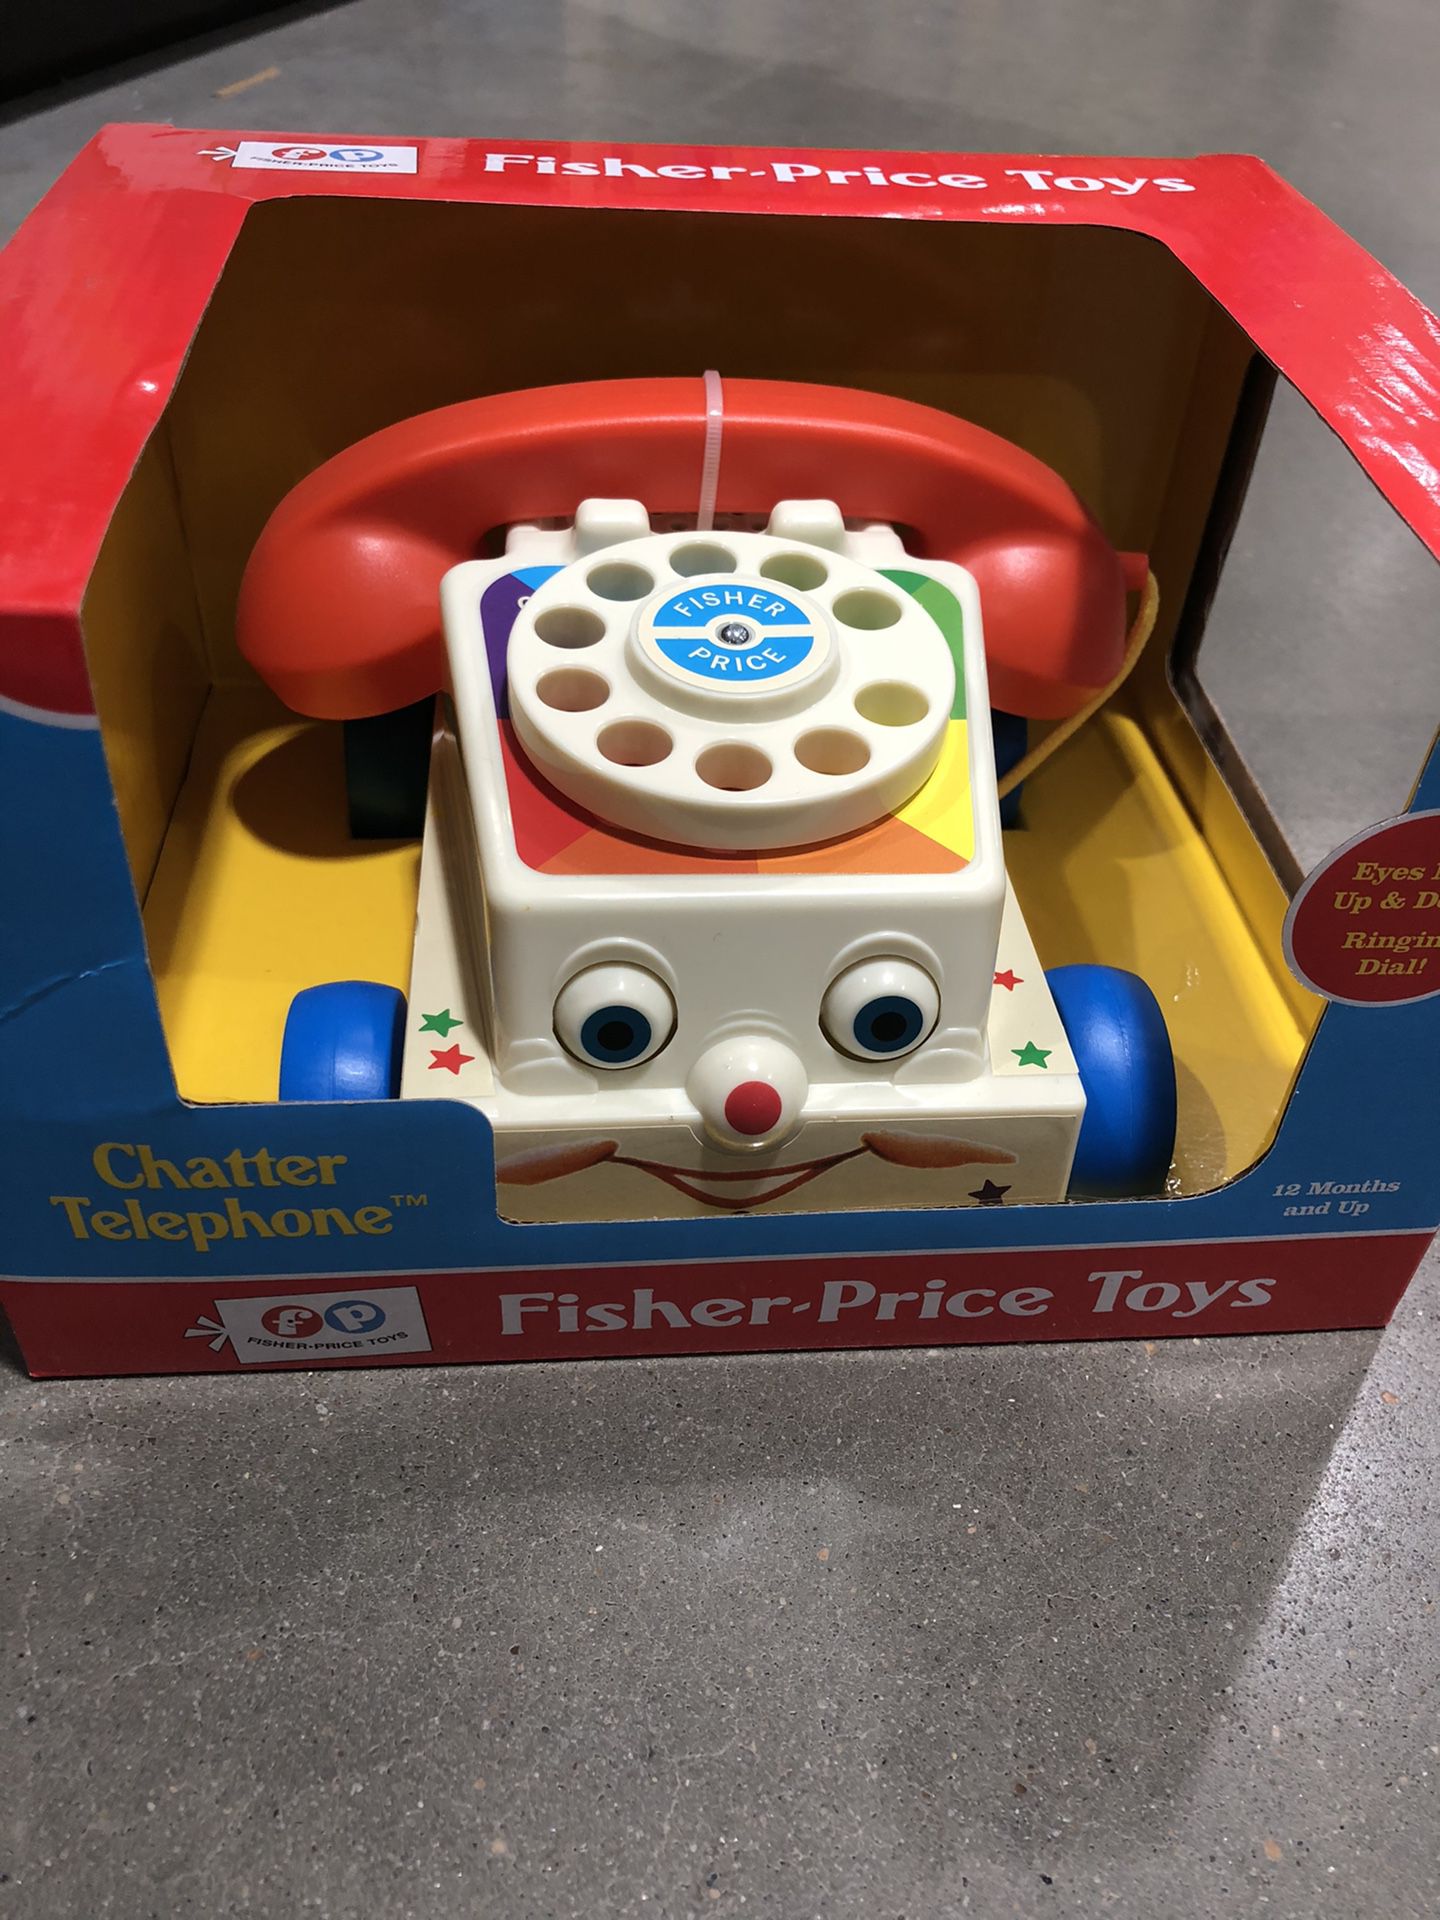 Fischer price chatter telephone